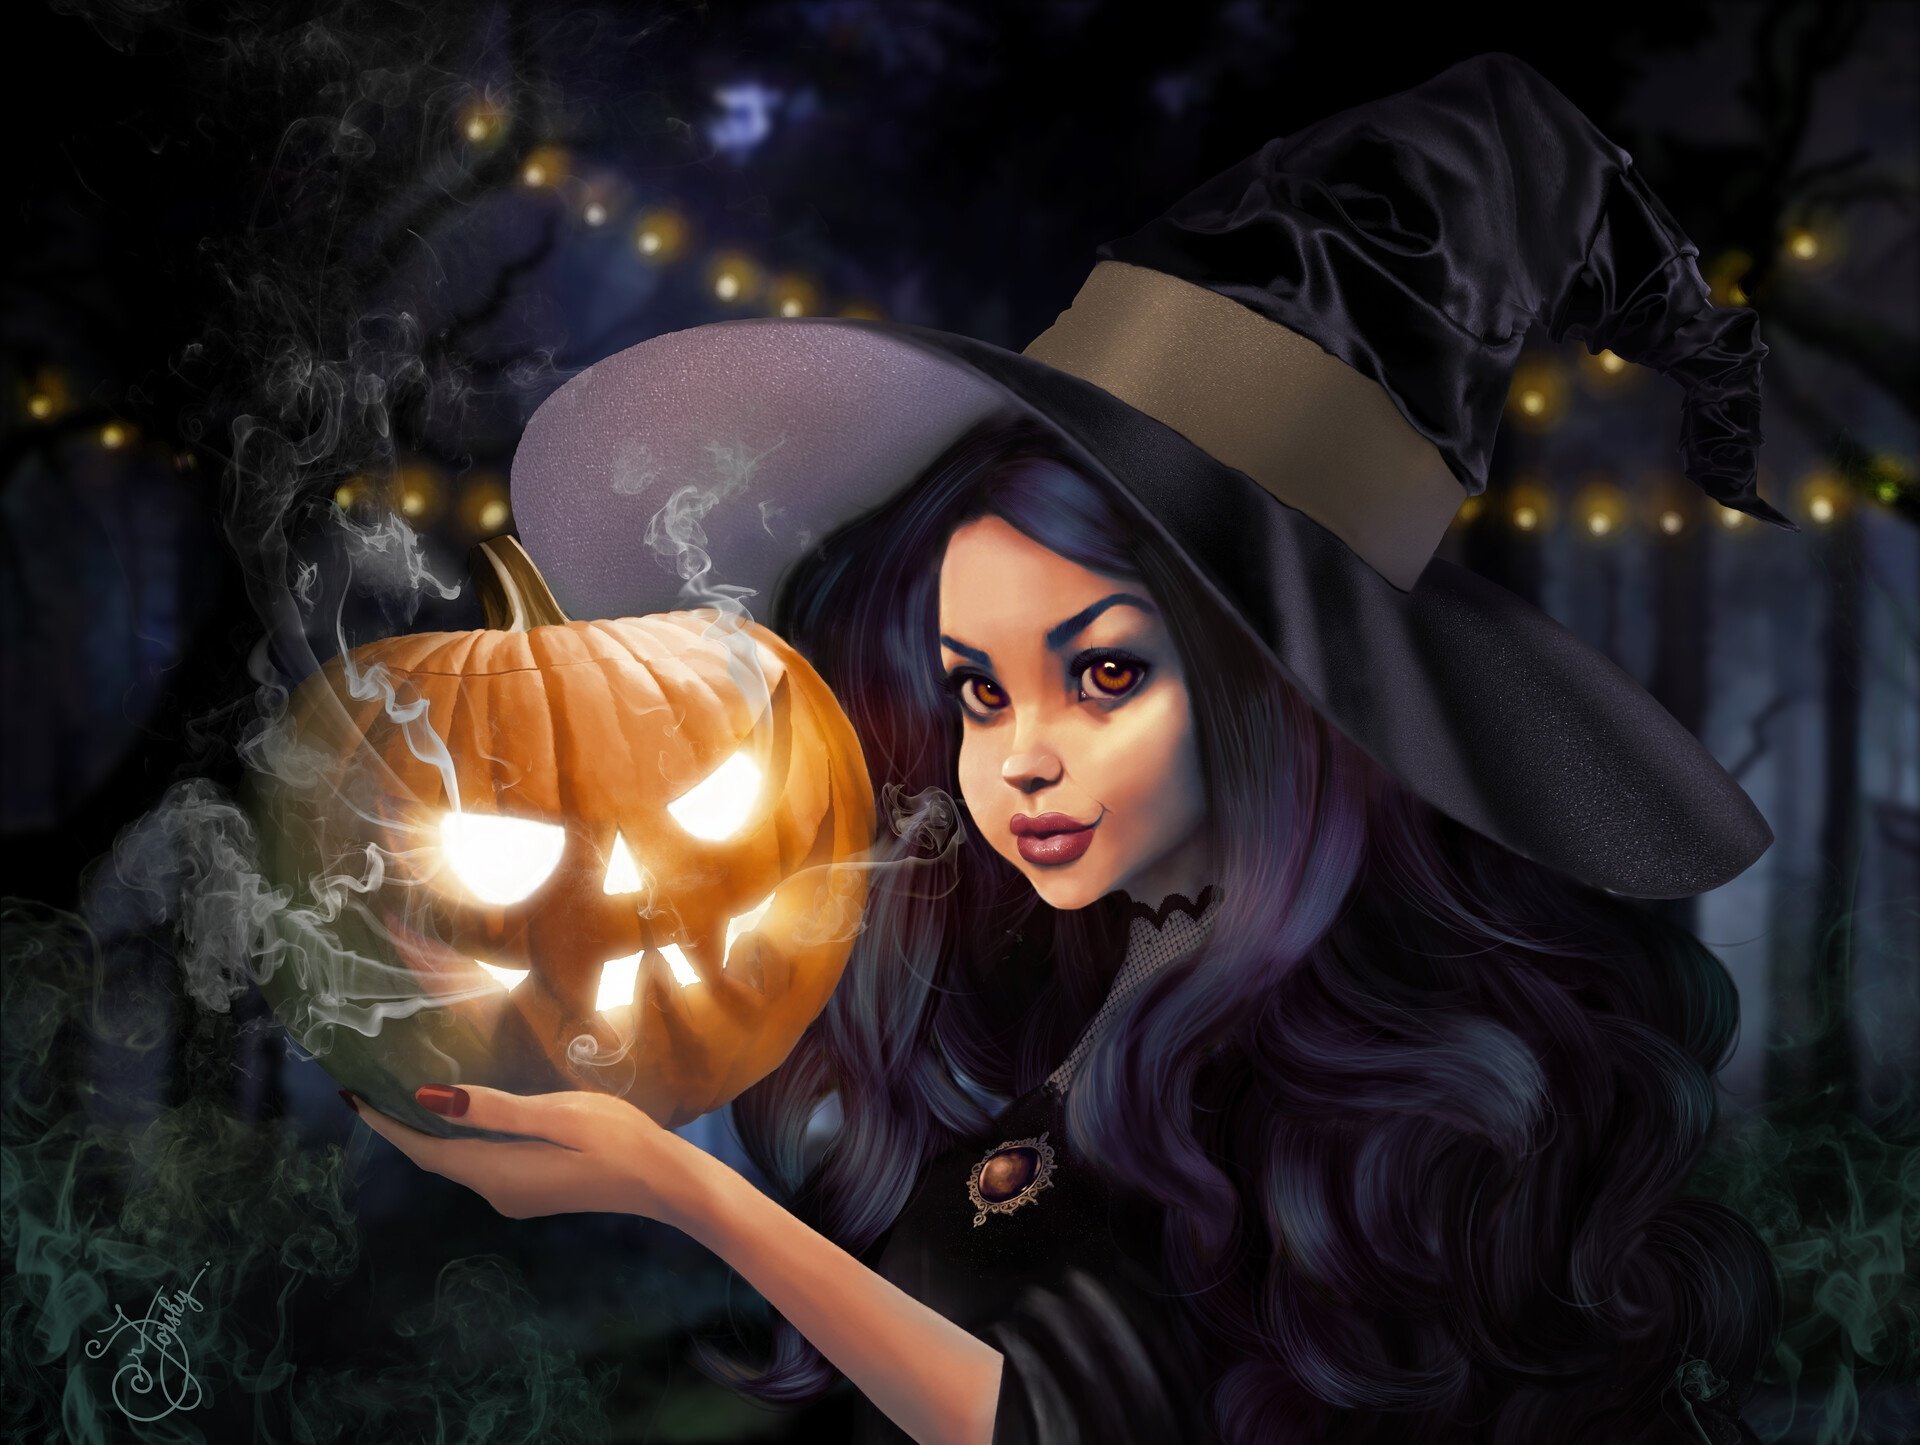 11000 Drawing Of A Cute Halloween Wallpaper Illustrations RoyaltyFree  Vector Graphics  Clip Art  iStock